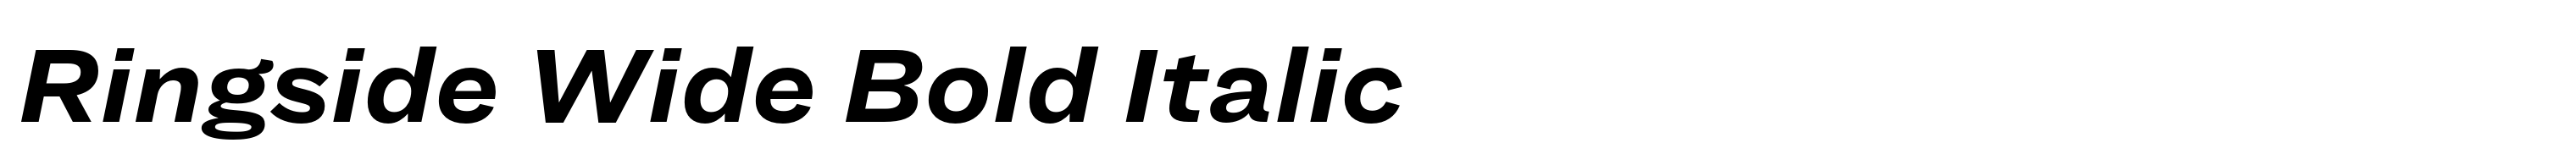 Ringside Wide Bold Italic